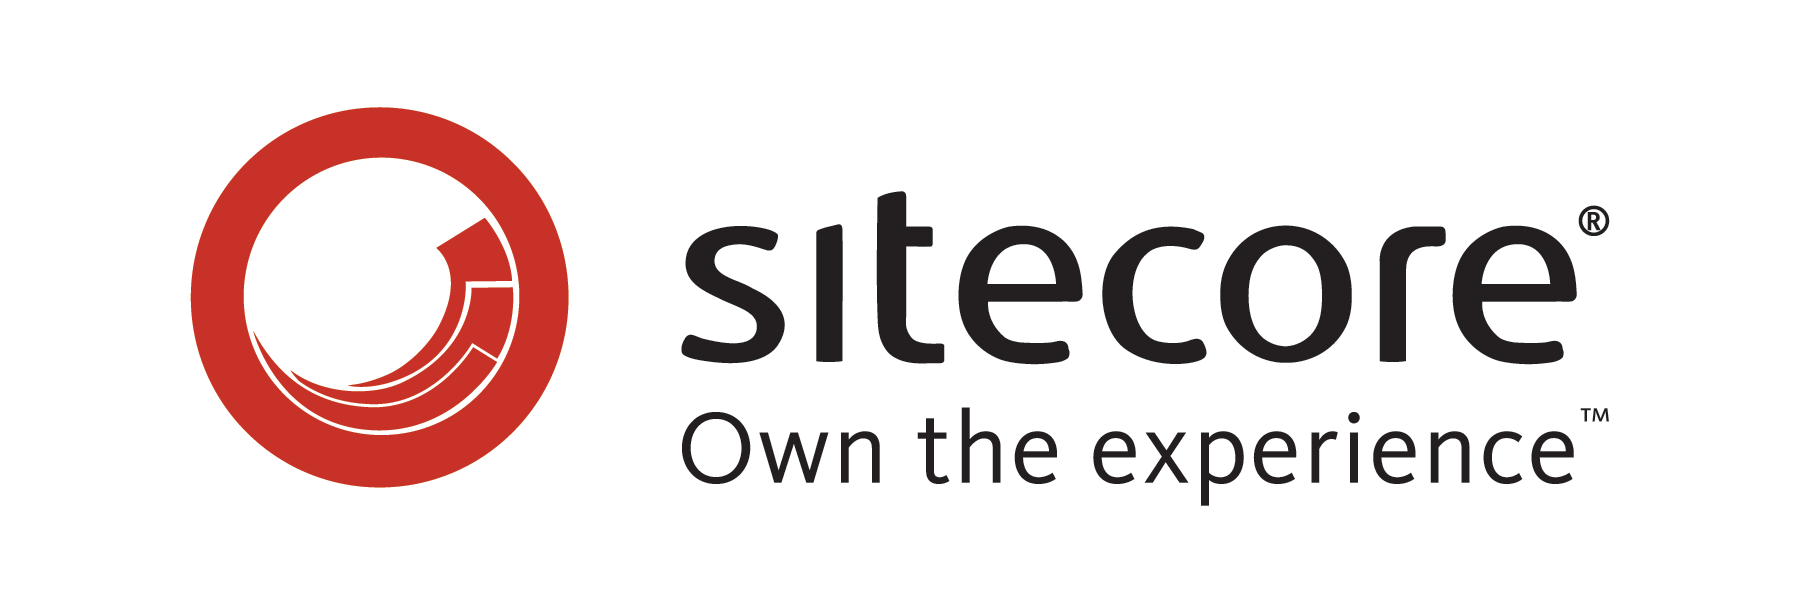 Sitecore Collaborates with Microsoft to Improve Sitecore's Microsoft Azure Cloud Offerings